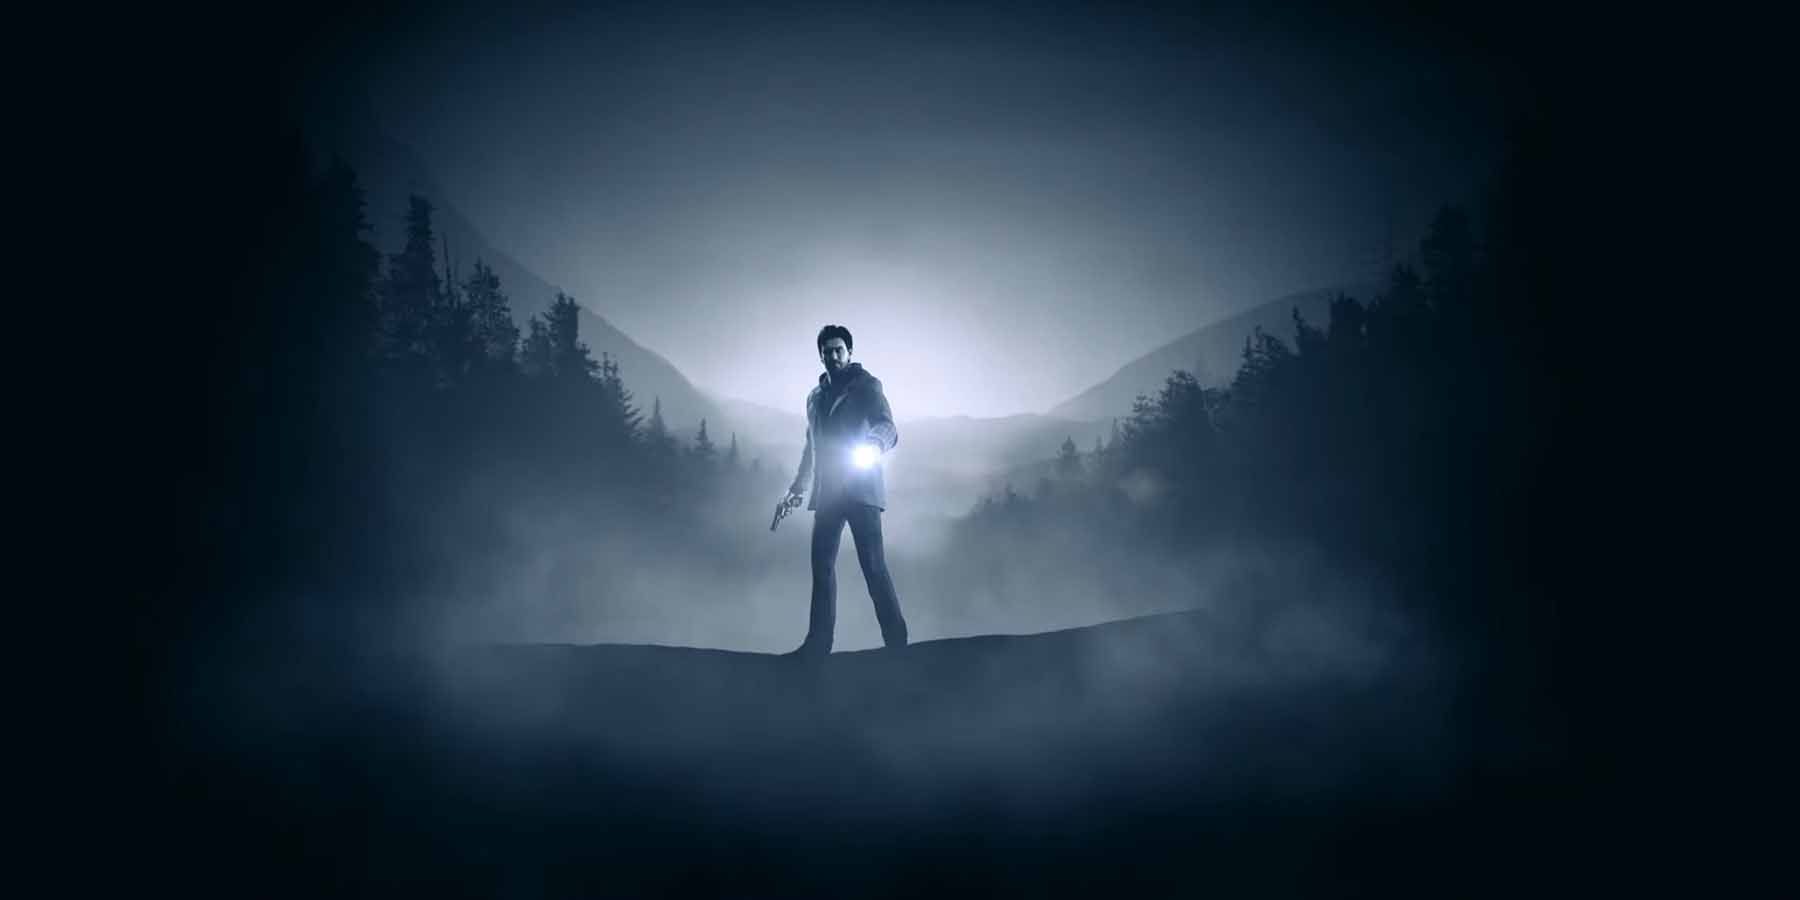 alan wake remastered playstation showcase 2021 trailer title remedy entertainment